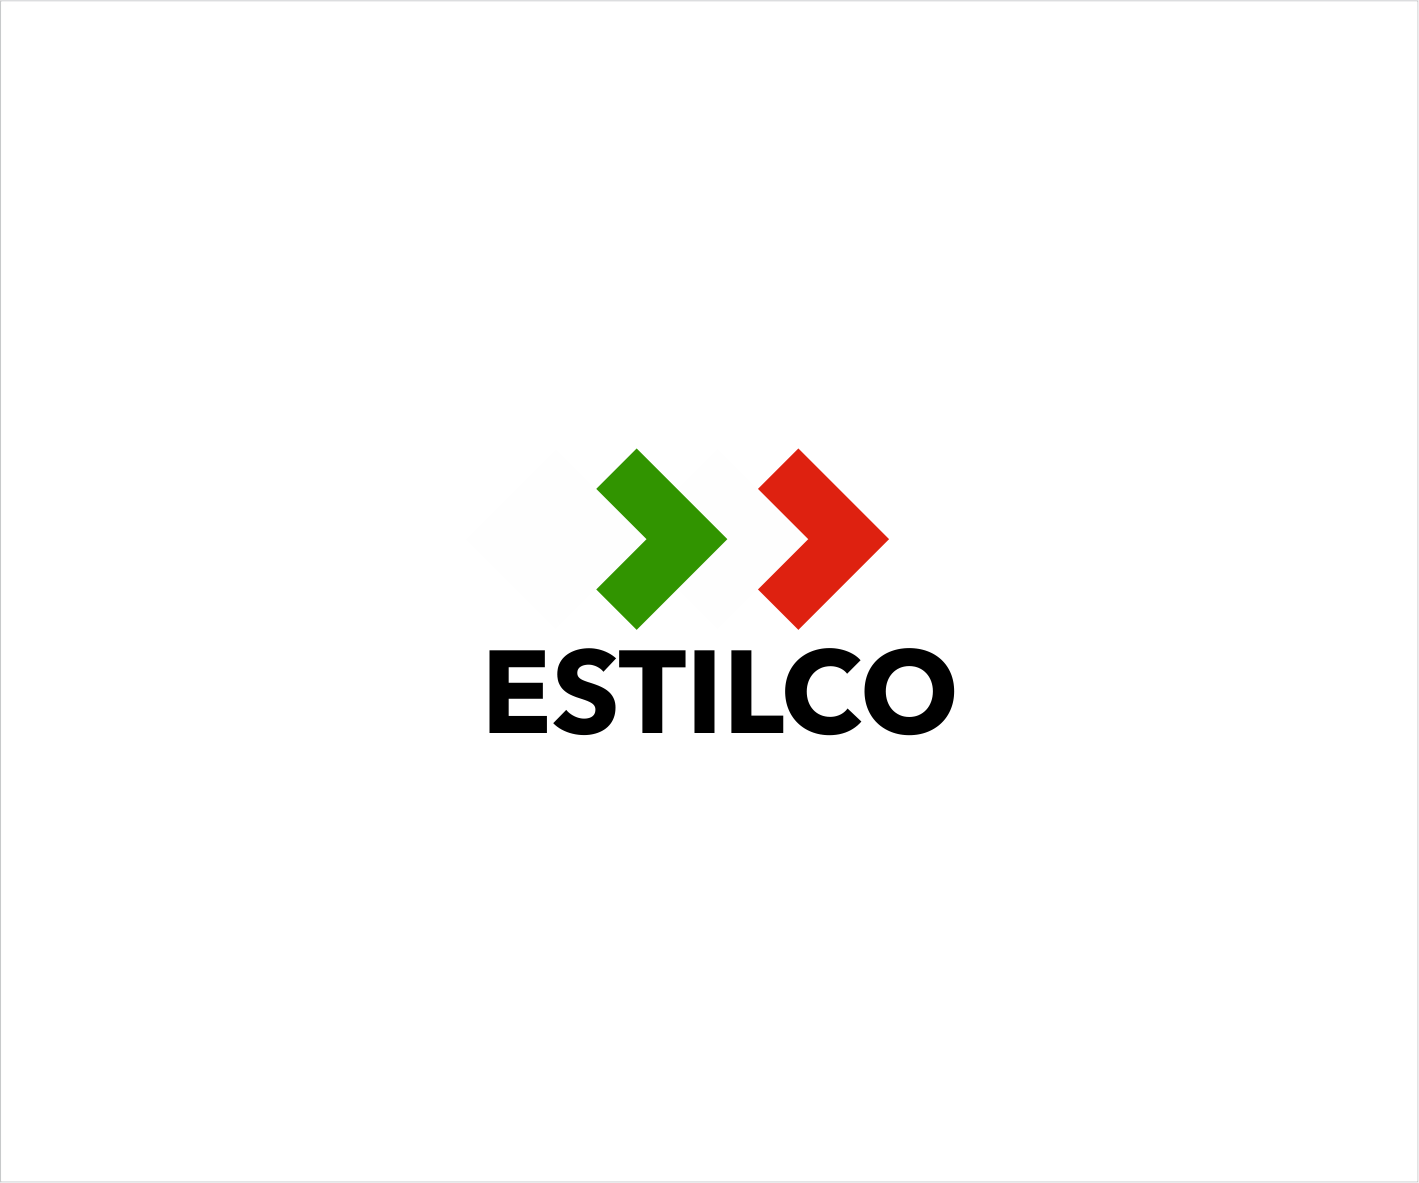 Distributor Logo - Modern, Professional, Distributor Logo Design for ESTILCO by ...